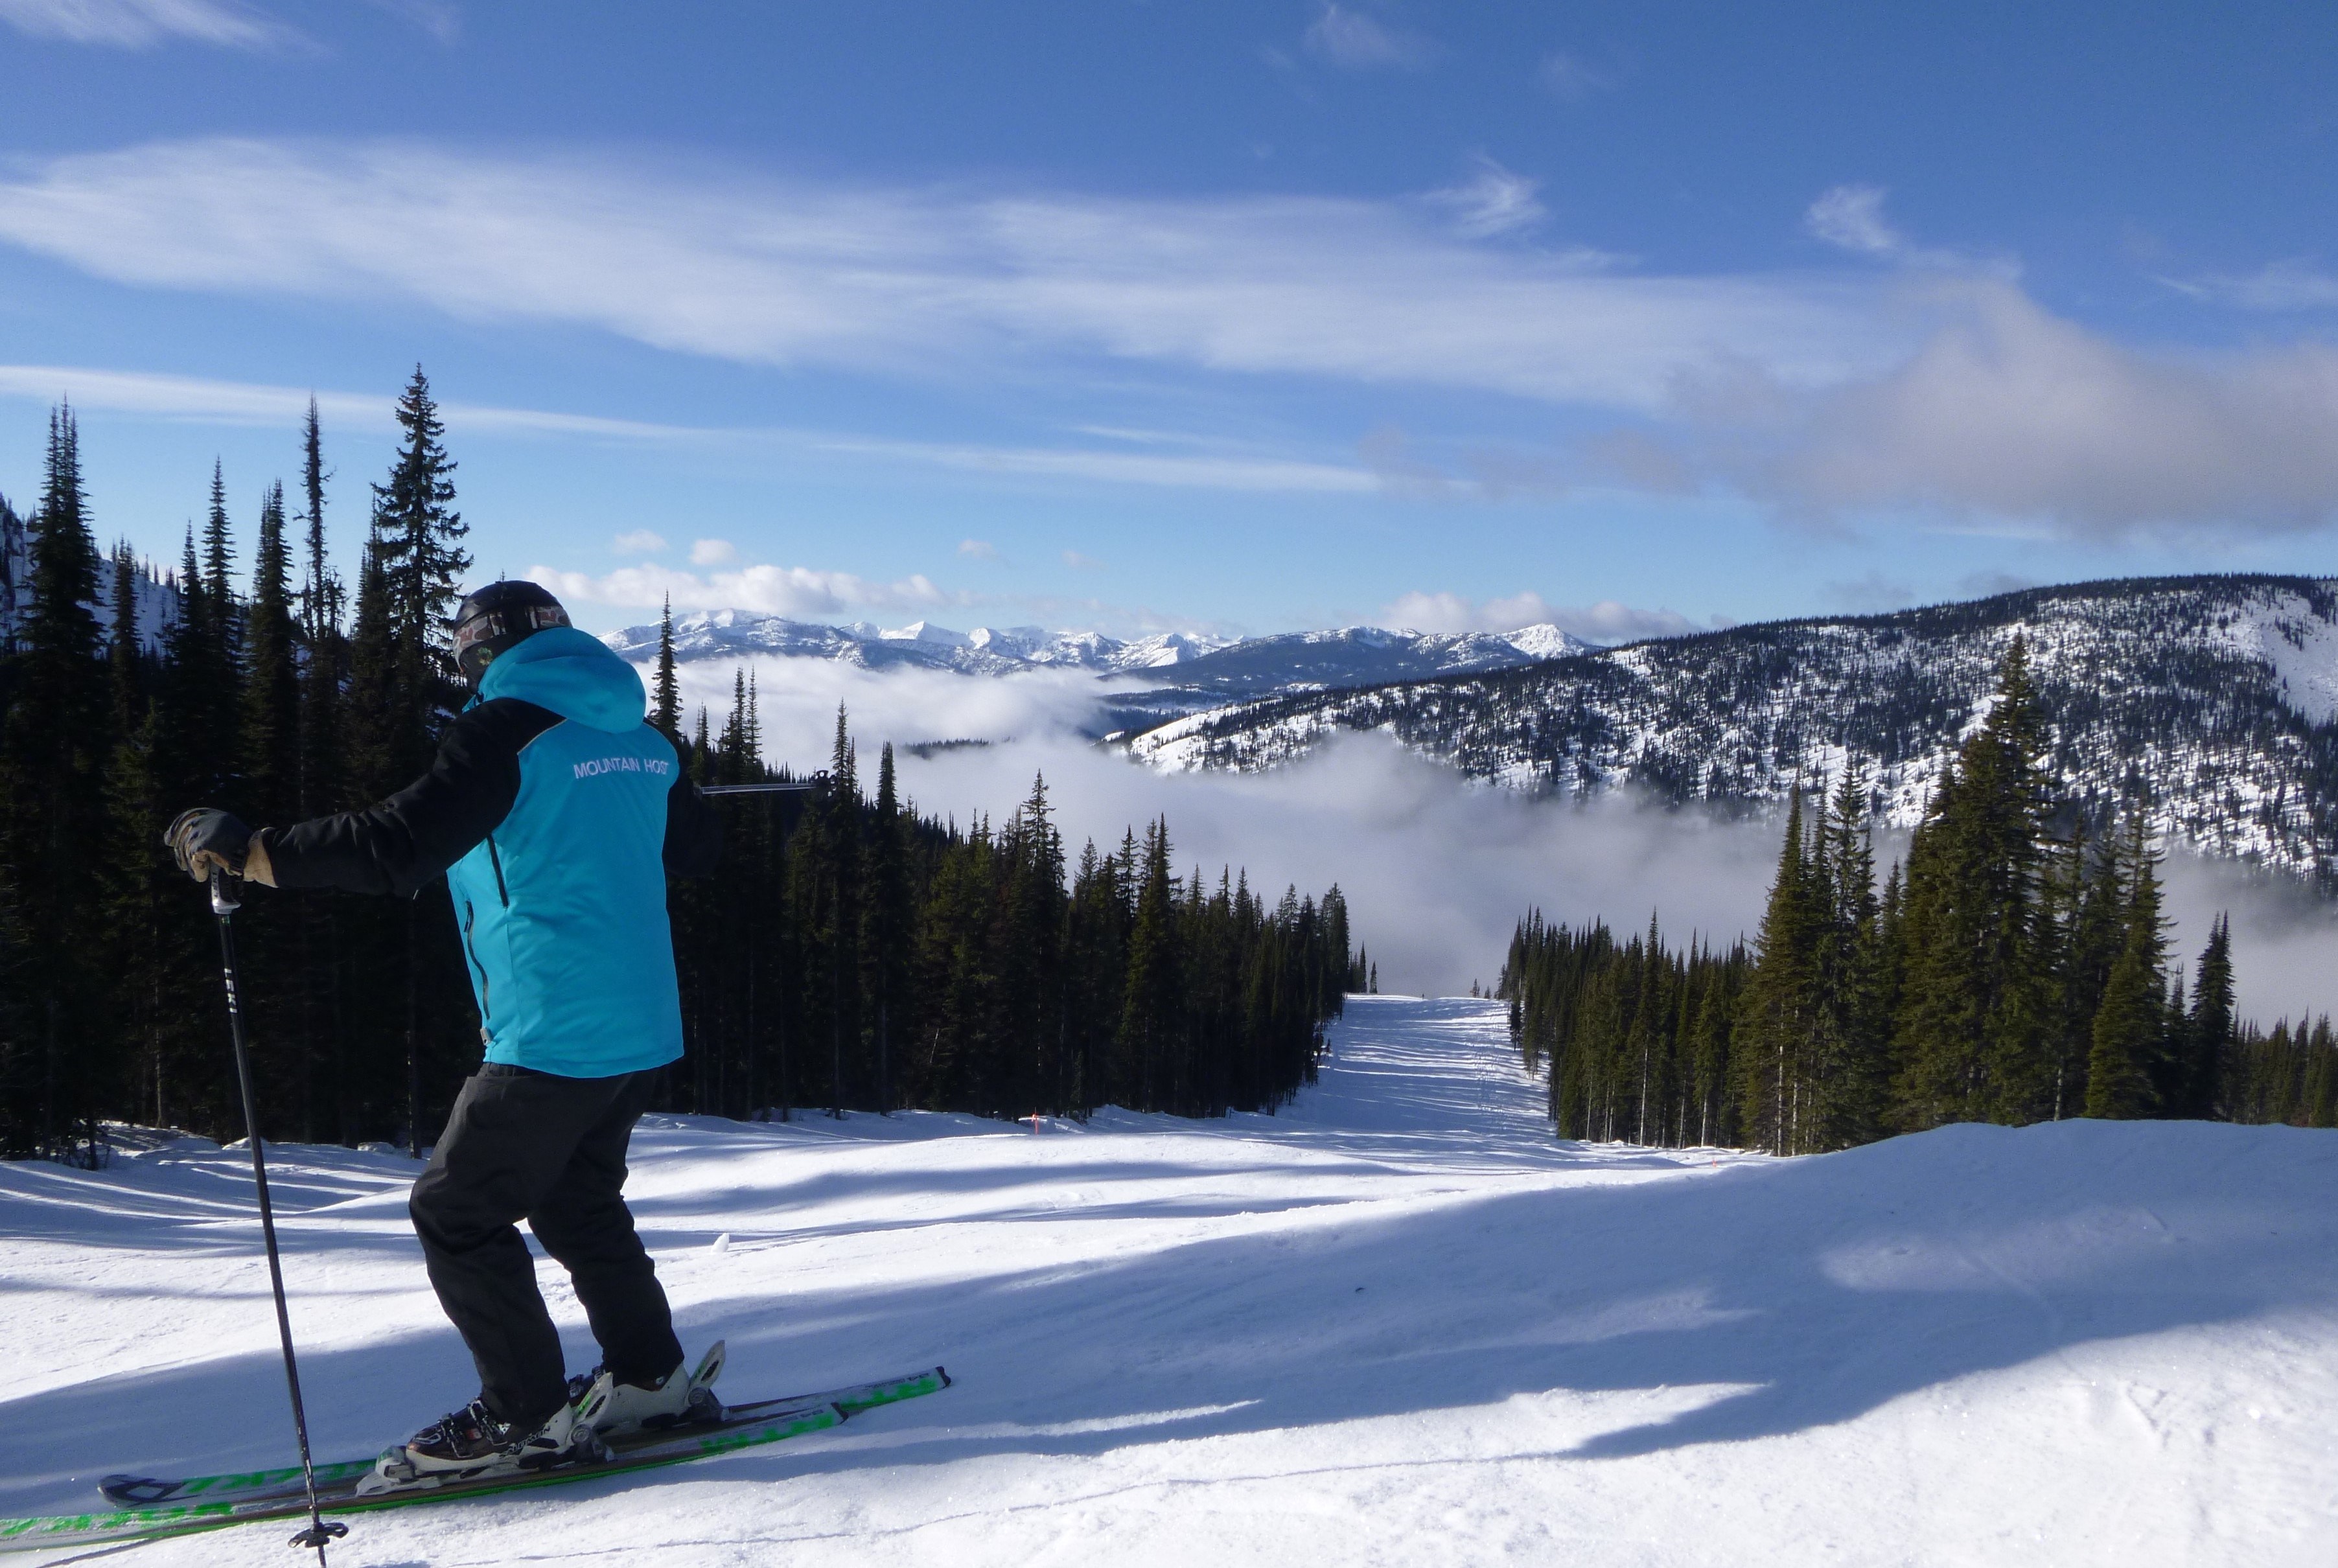 whitewater ski resort guide nelson BC powder Highway skier